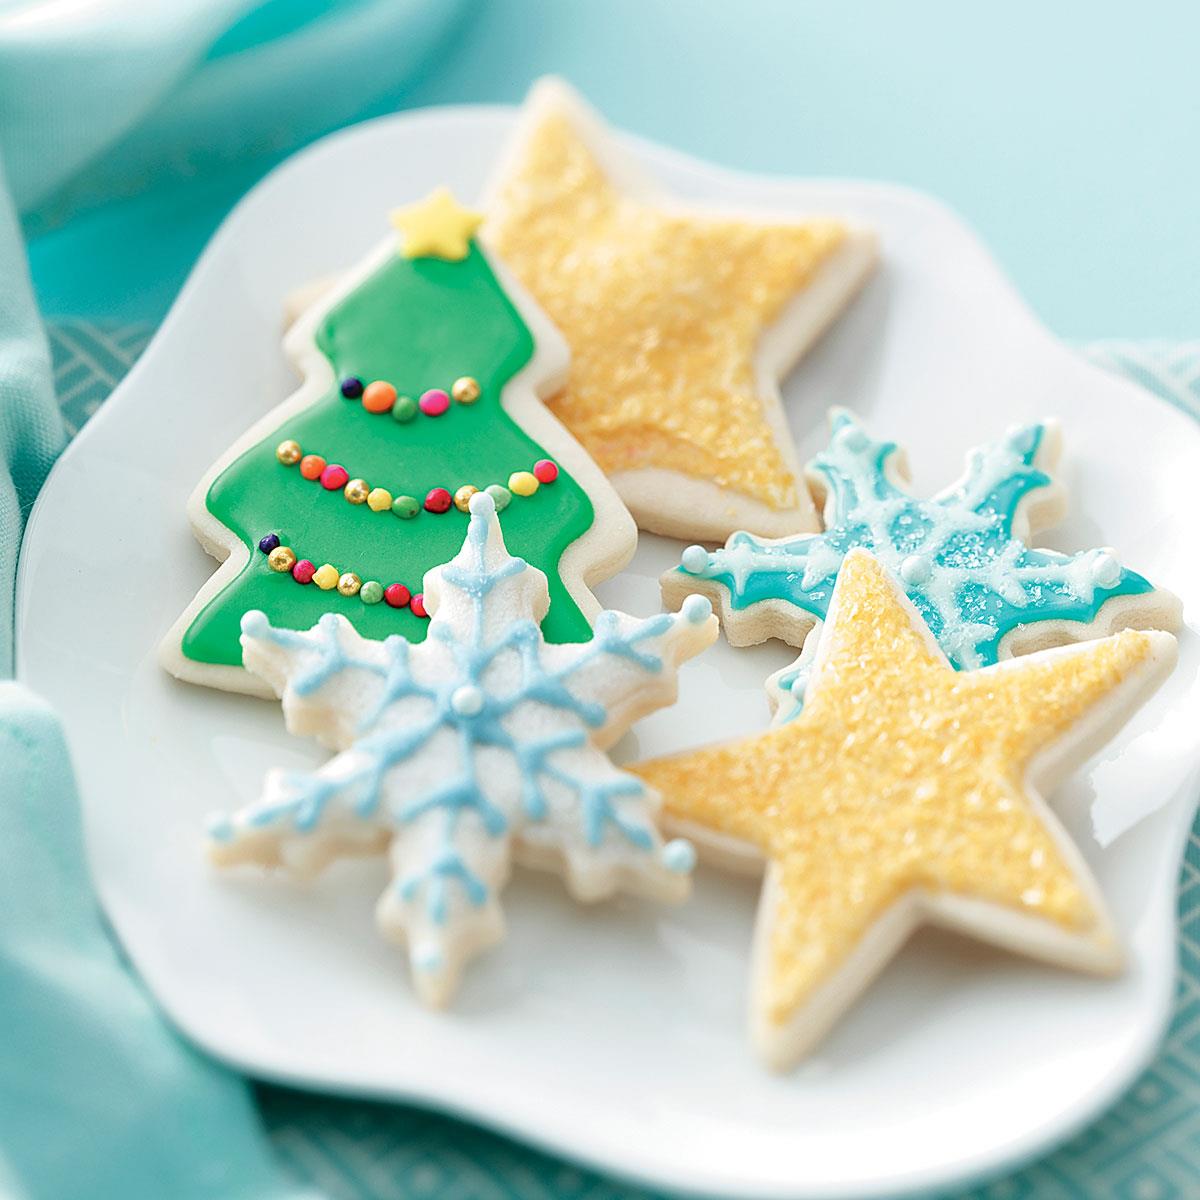 christmas sugar cookies recipe